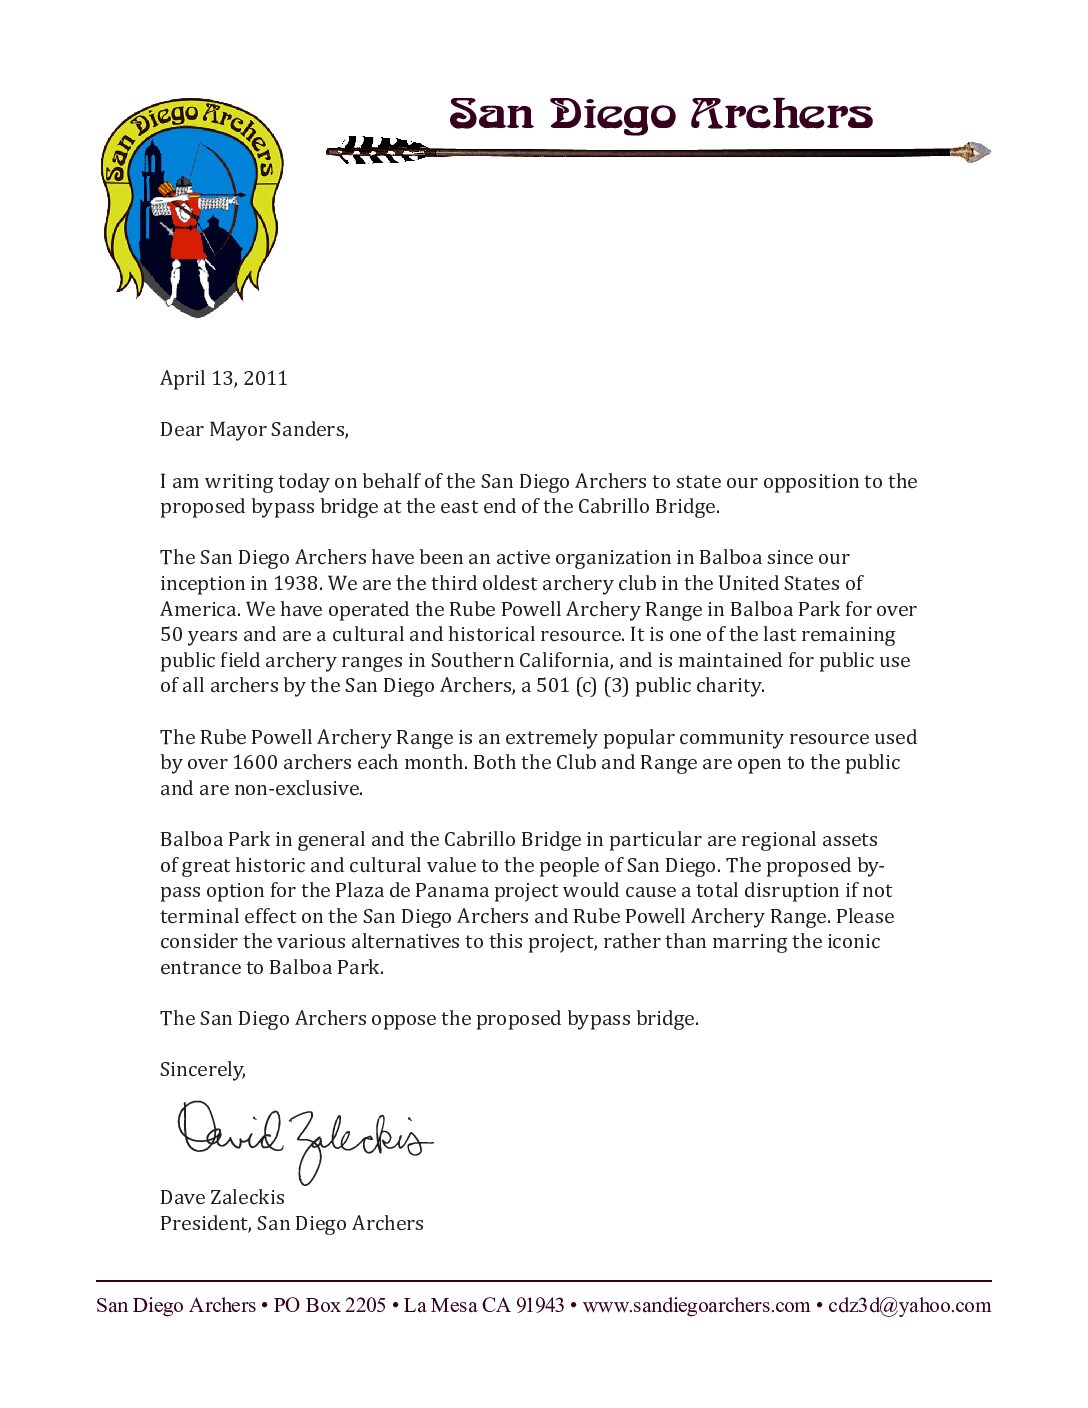 dave zaleckis letter to city of sandiego regarding bridge